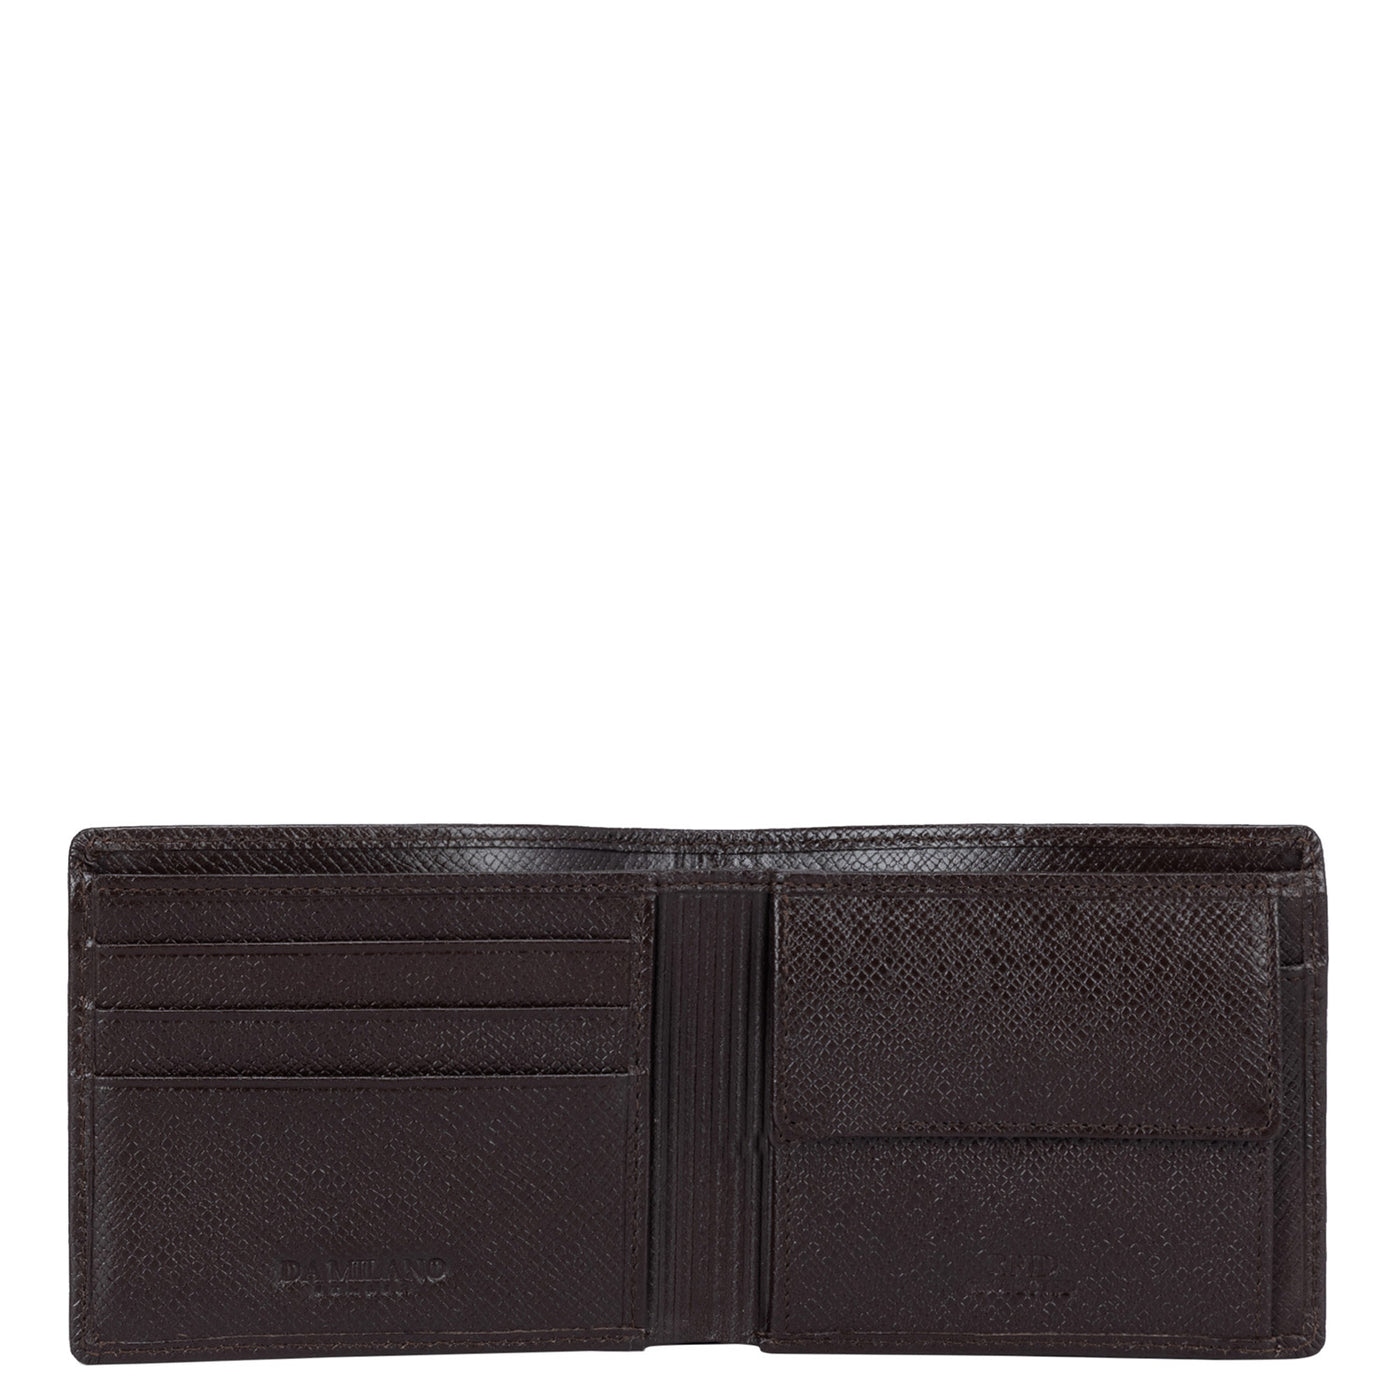 Oak Saffiano Franzy Leather Mens Wallet & Belt Gift Set